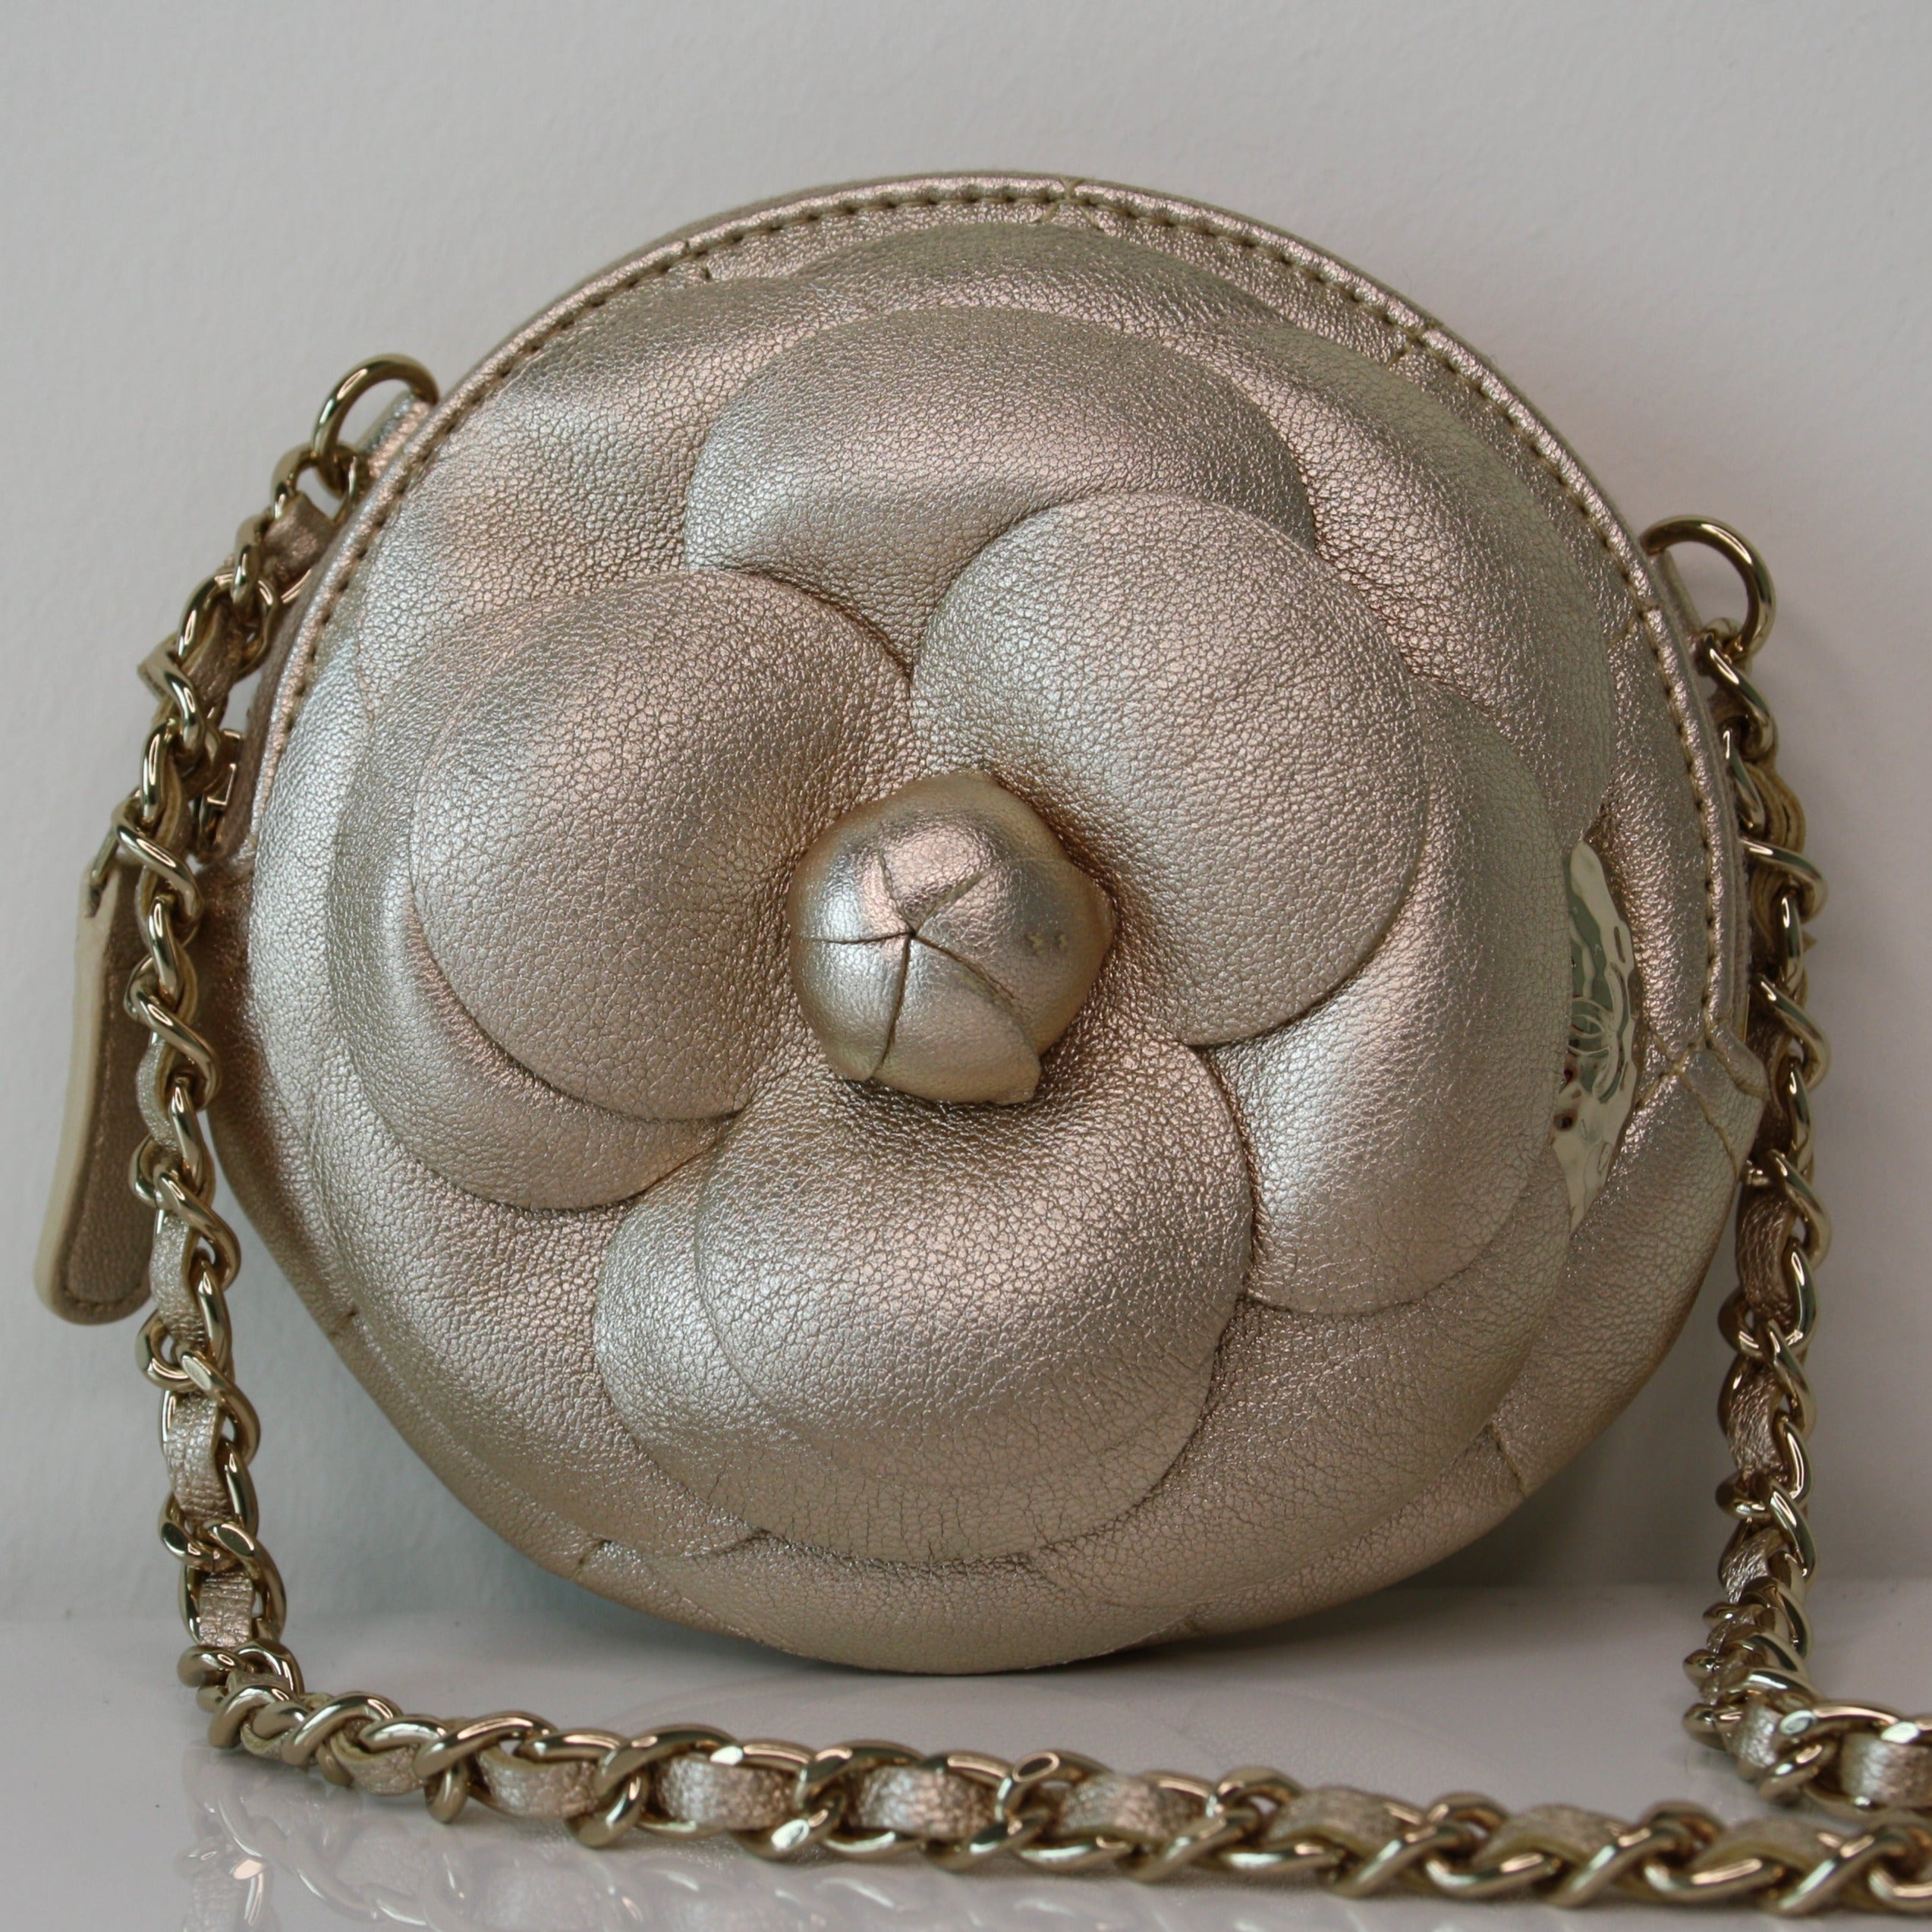 Chanel Vintage Pearl Evening Bag